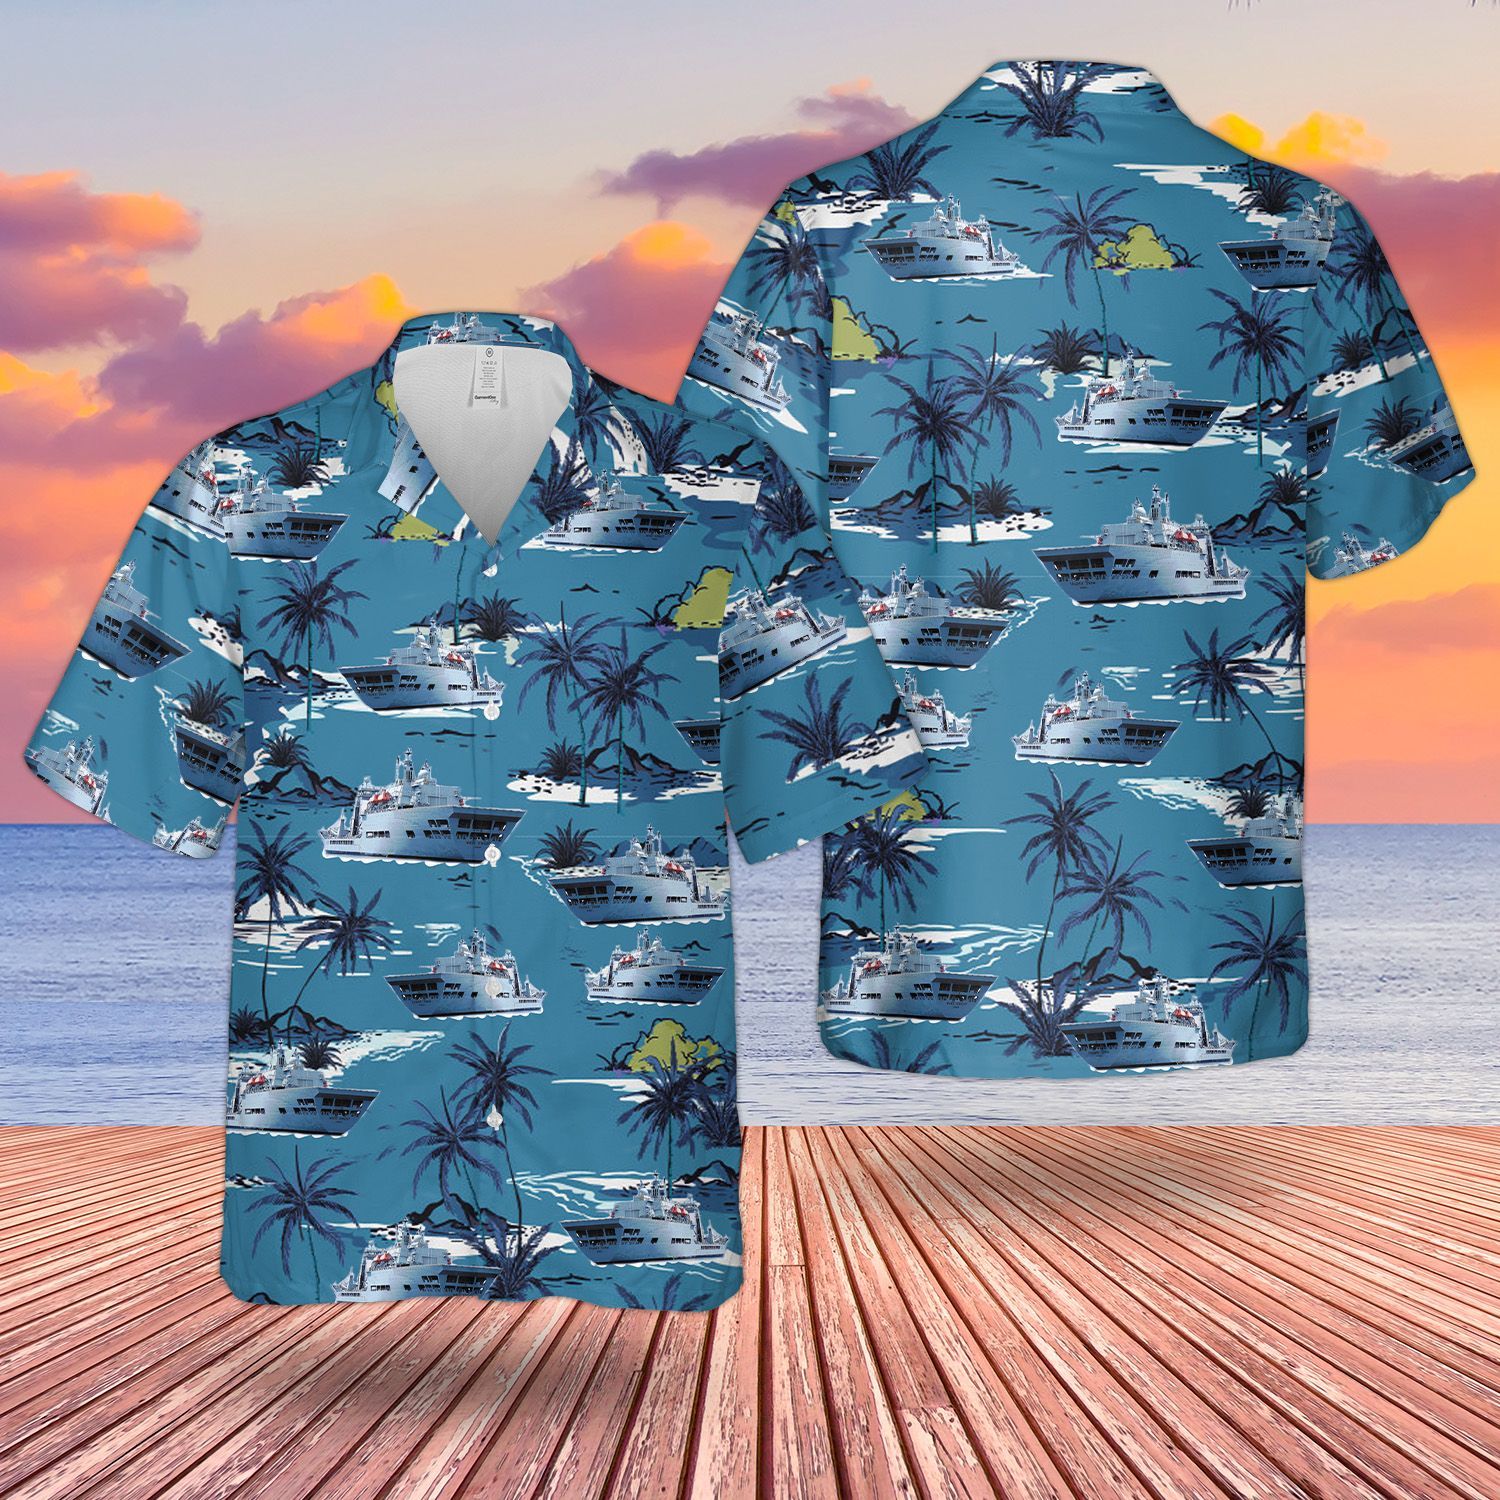 Enjoy your summer with top cool hawaiian shirt below 296